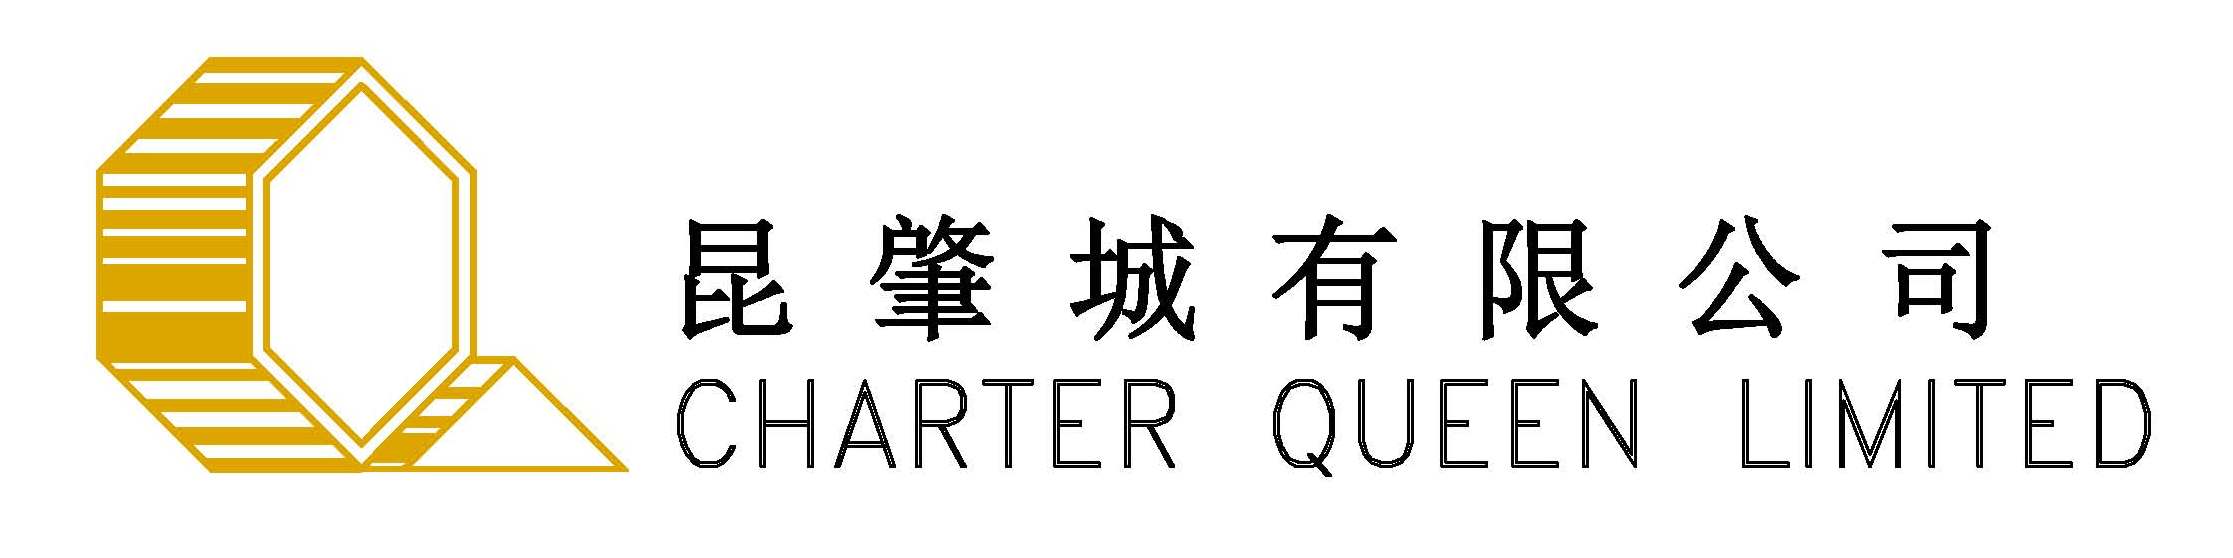 Logo CQ